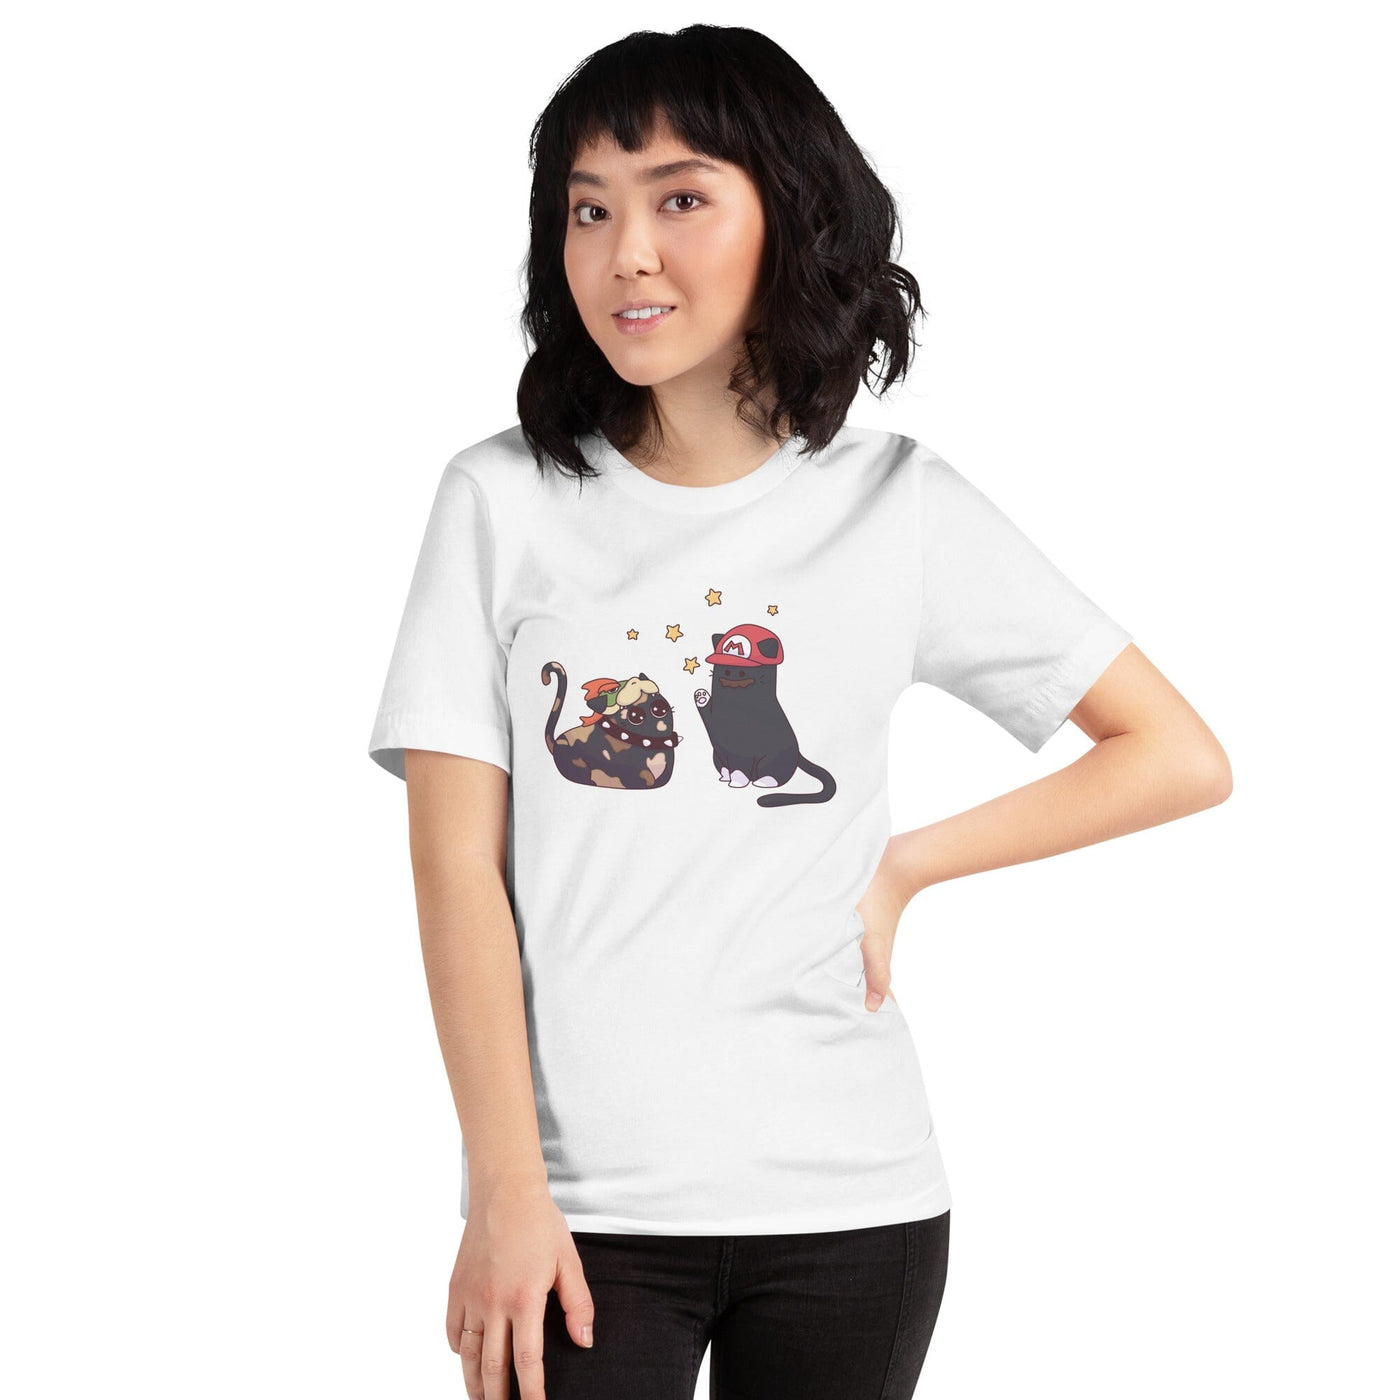 Team Bowser & Mario Kitties | Unisex t-shirt | TTI Stream Threads & Thistles Inventory 